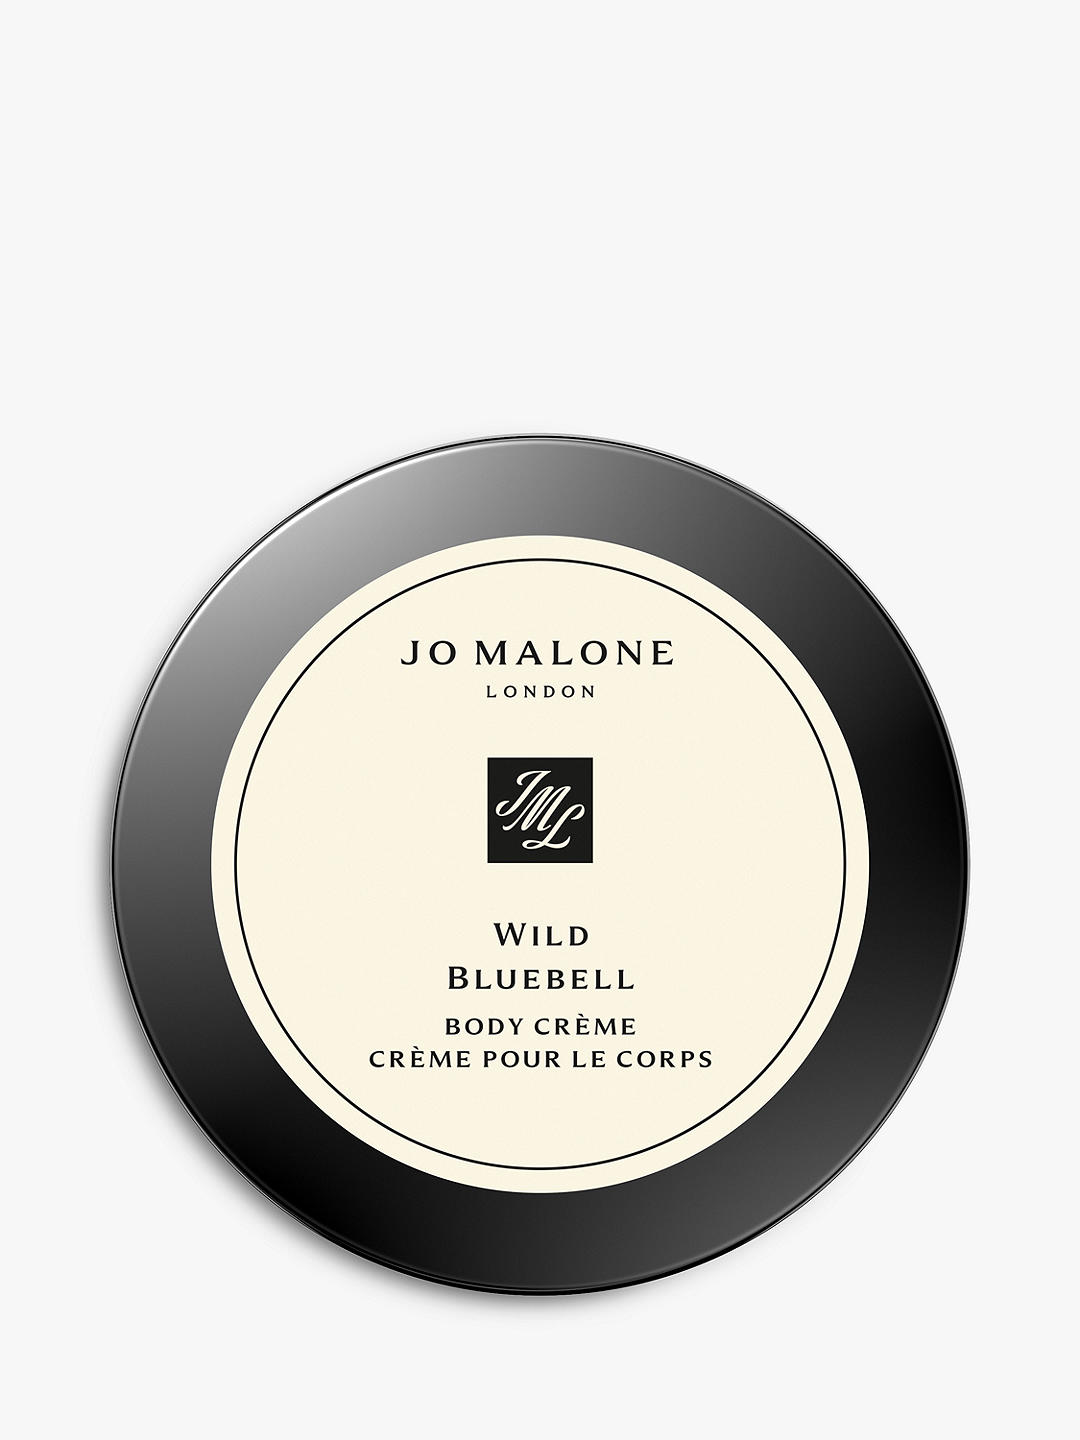 Jo Malone London Wild Bluebell Body Crème, 50ml 1